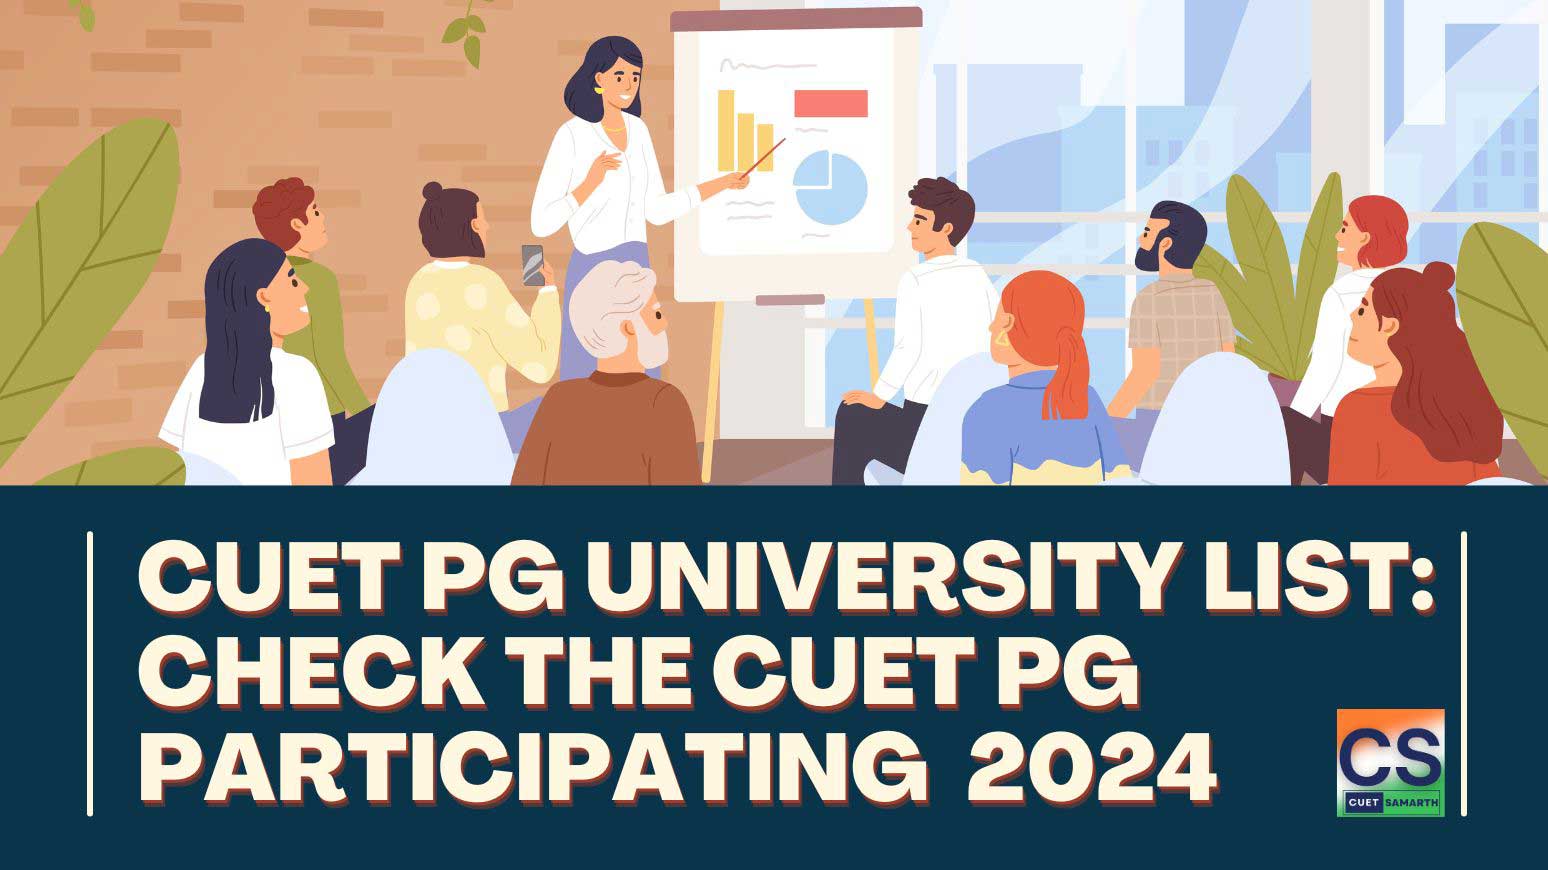 CUET PG University List: Check the CUET PG participating 2024